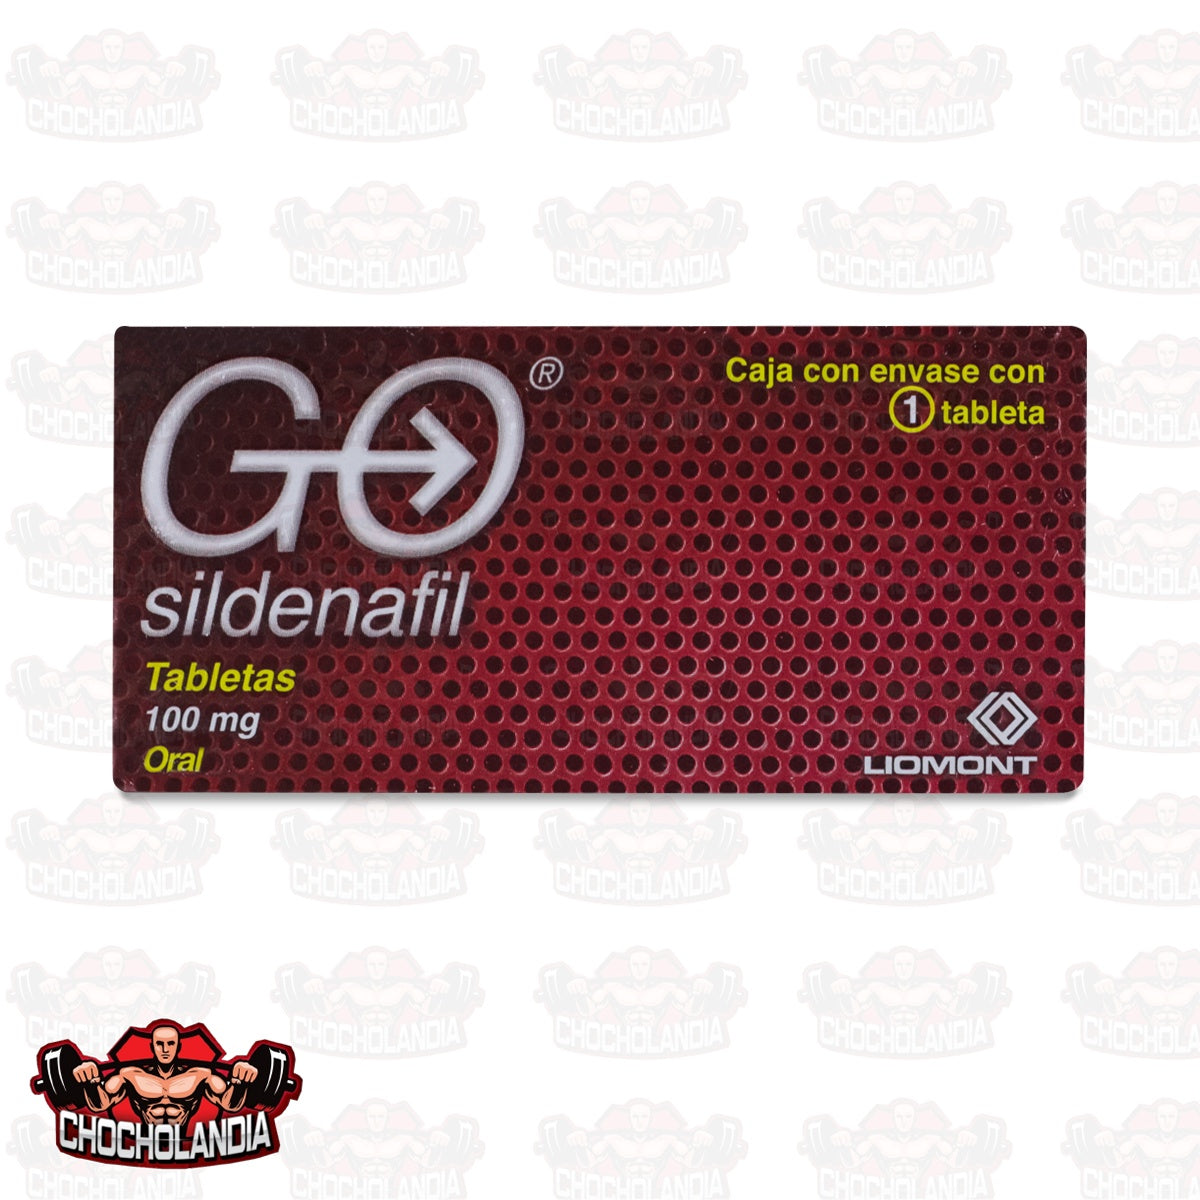 SILDENAFIL GO, 1 TABLETA DE 100 MG, LIOMONT